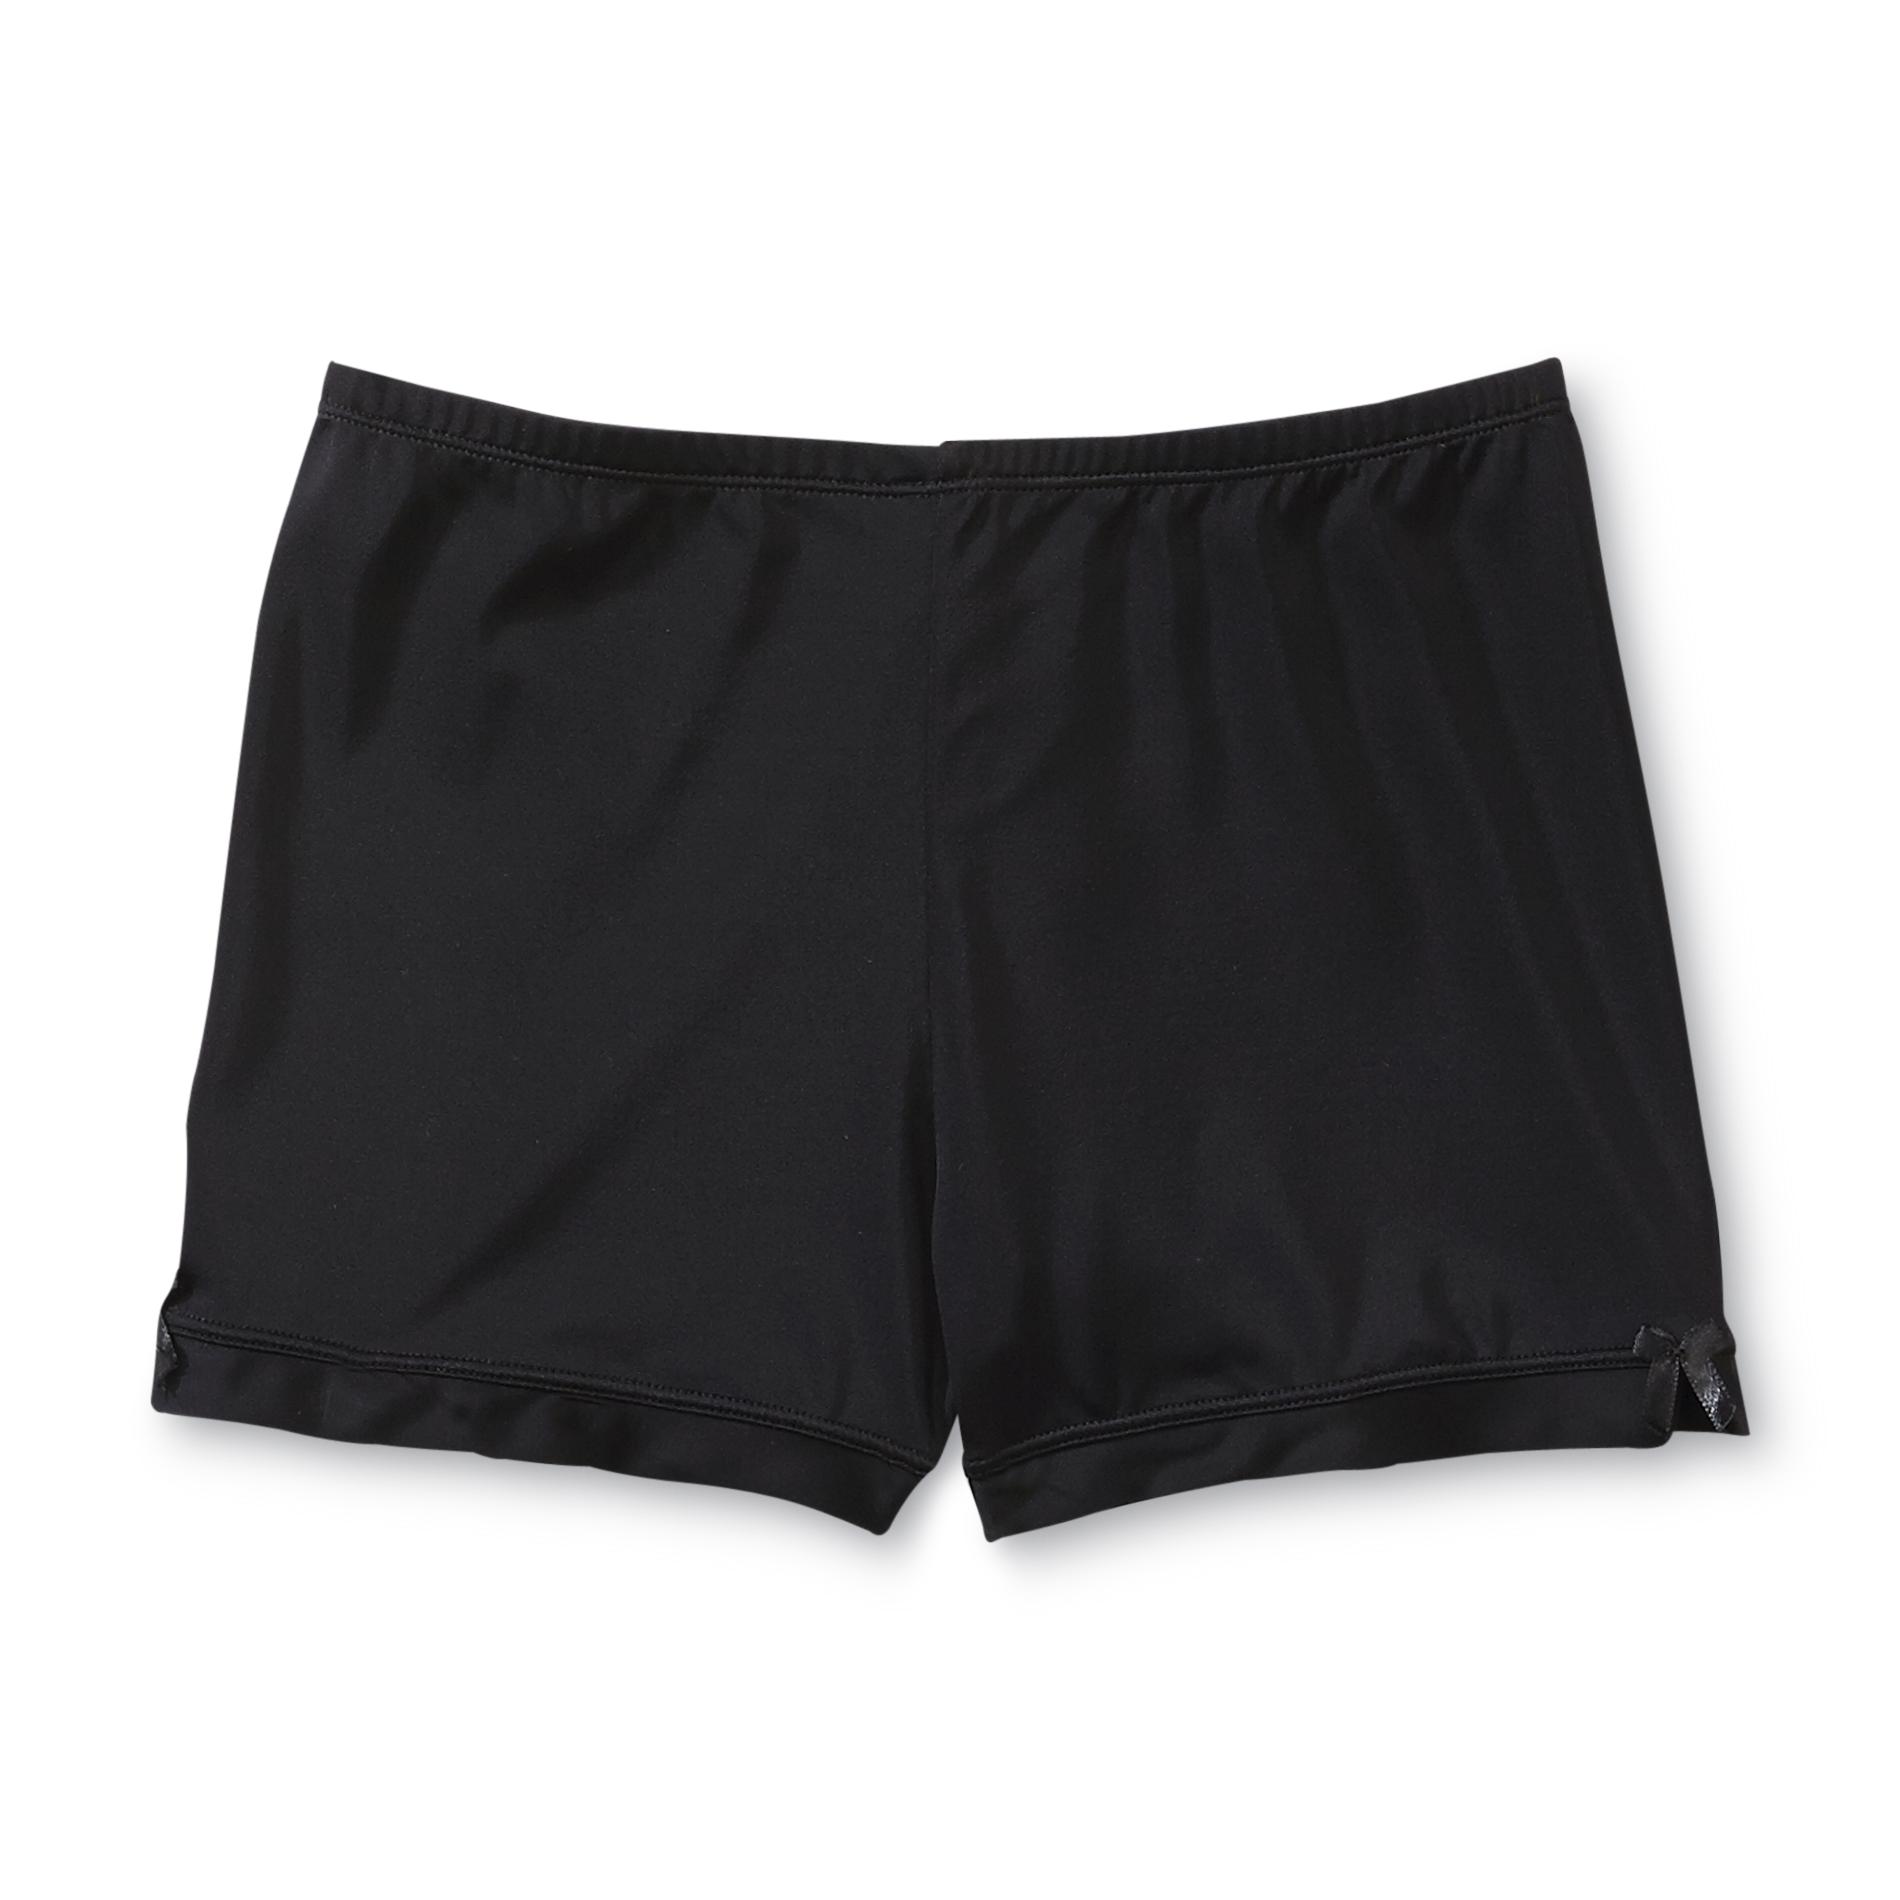 Jacques Moret Girl's Athletic Tumble Shorts